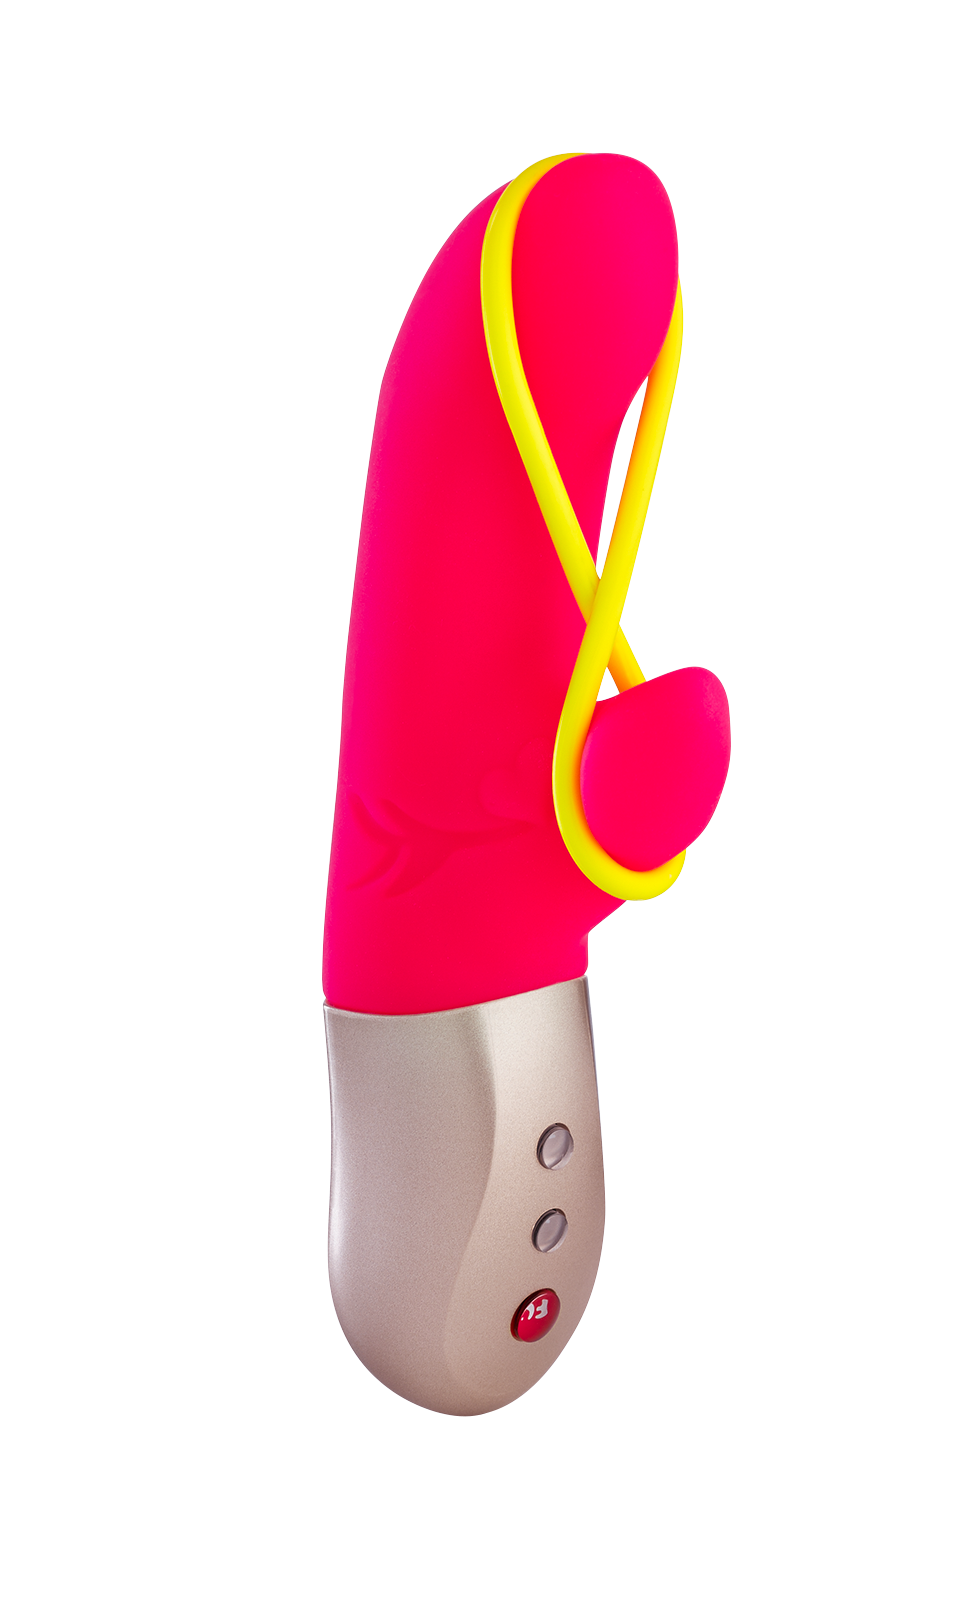 Fun Factory Amorino Rabbit Vibrator Pink / Neon YELLOW